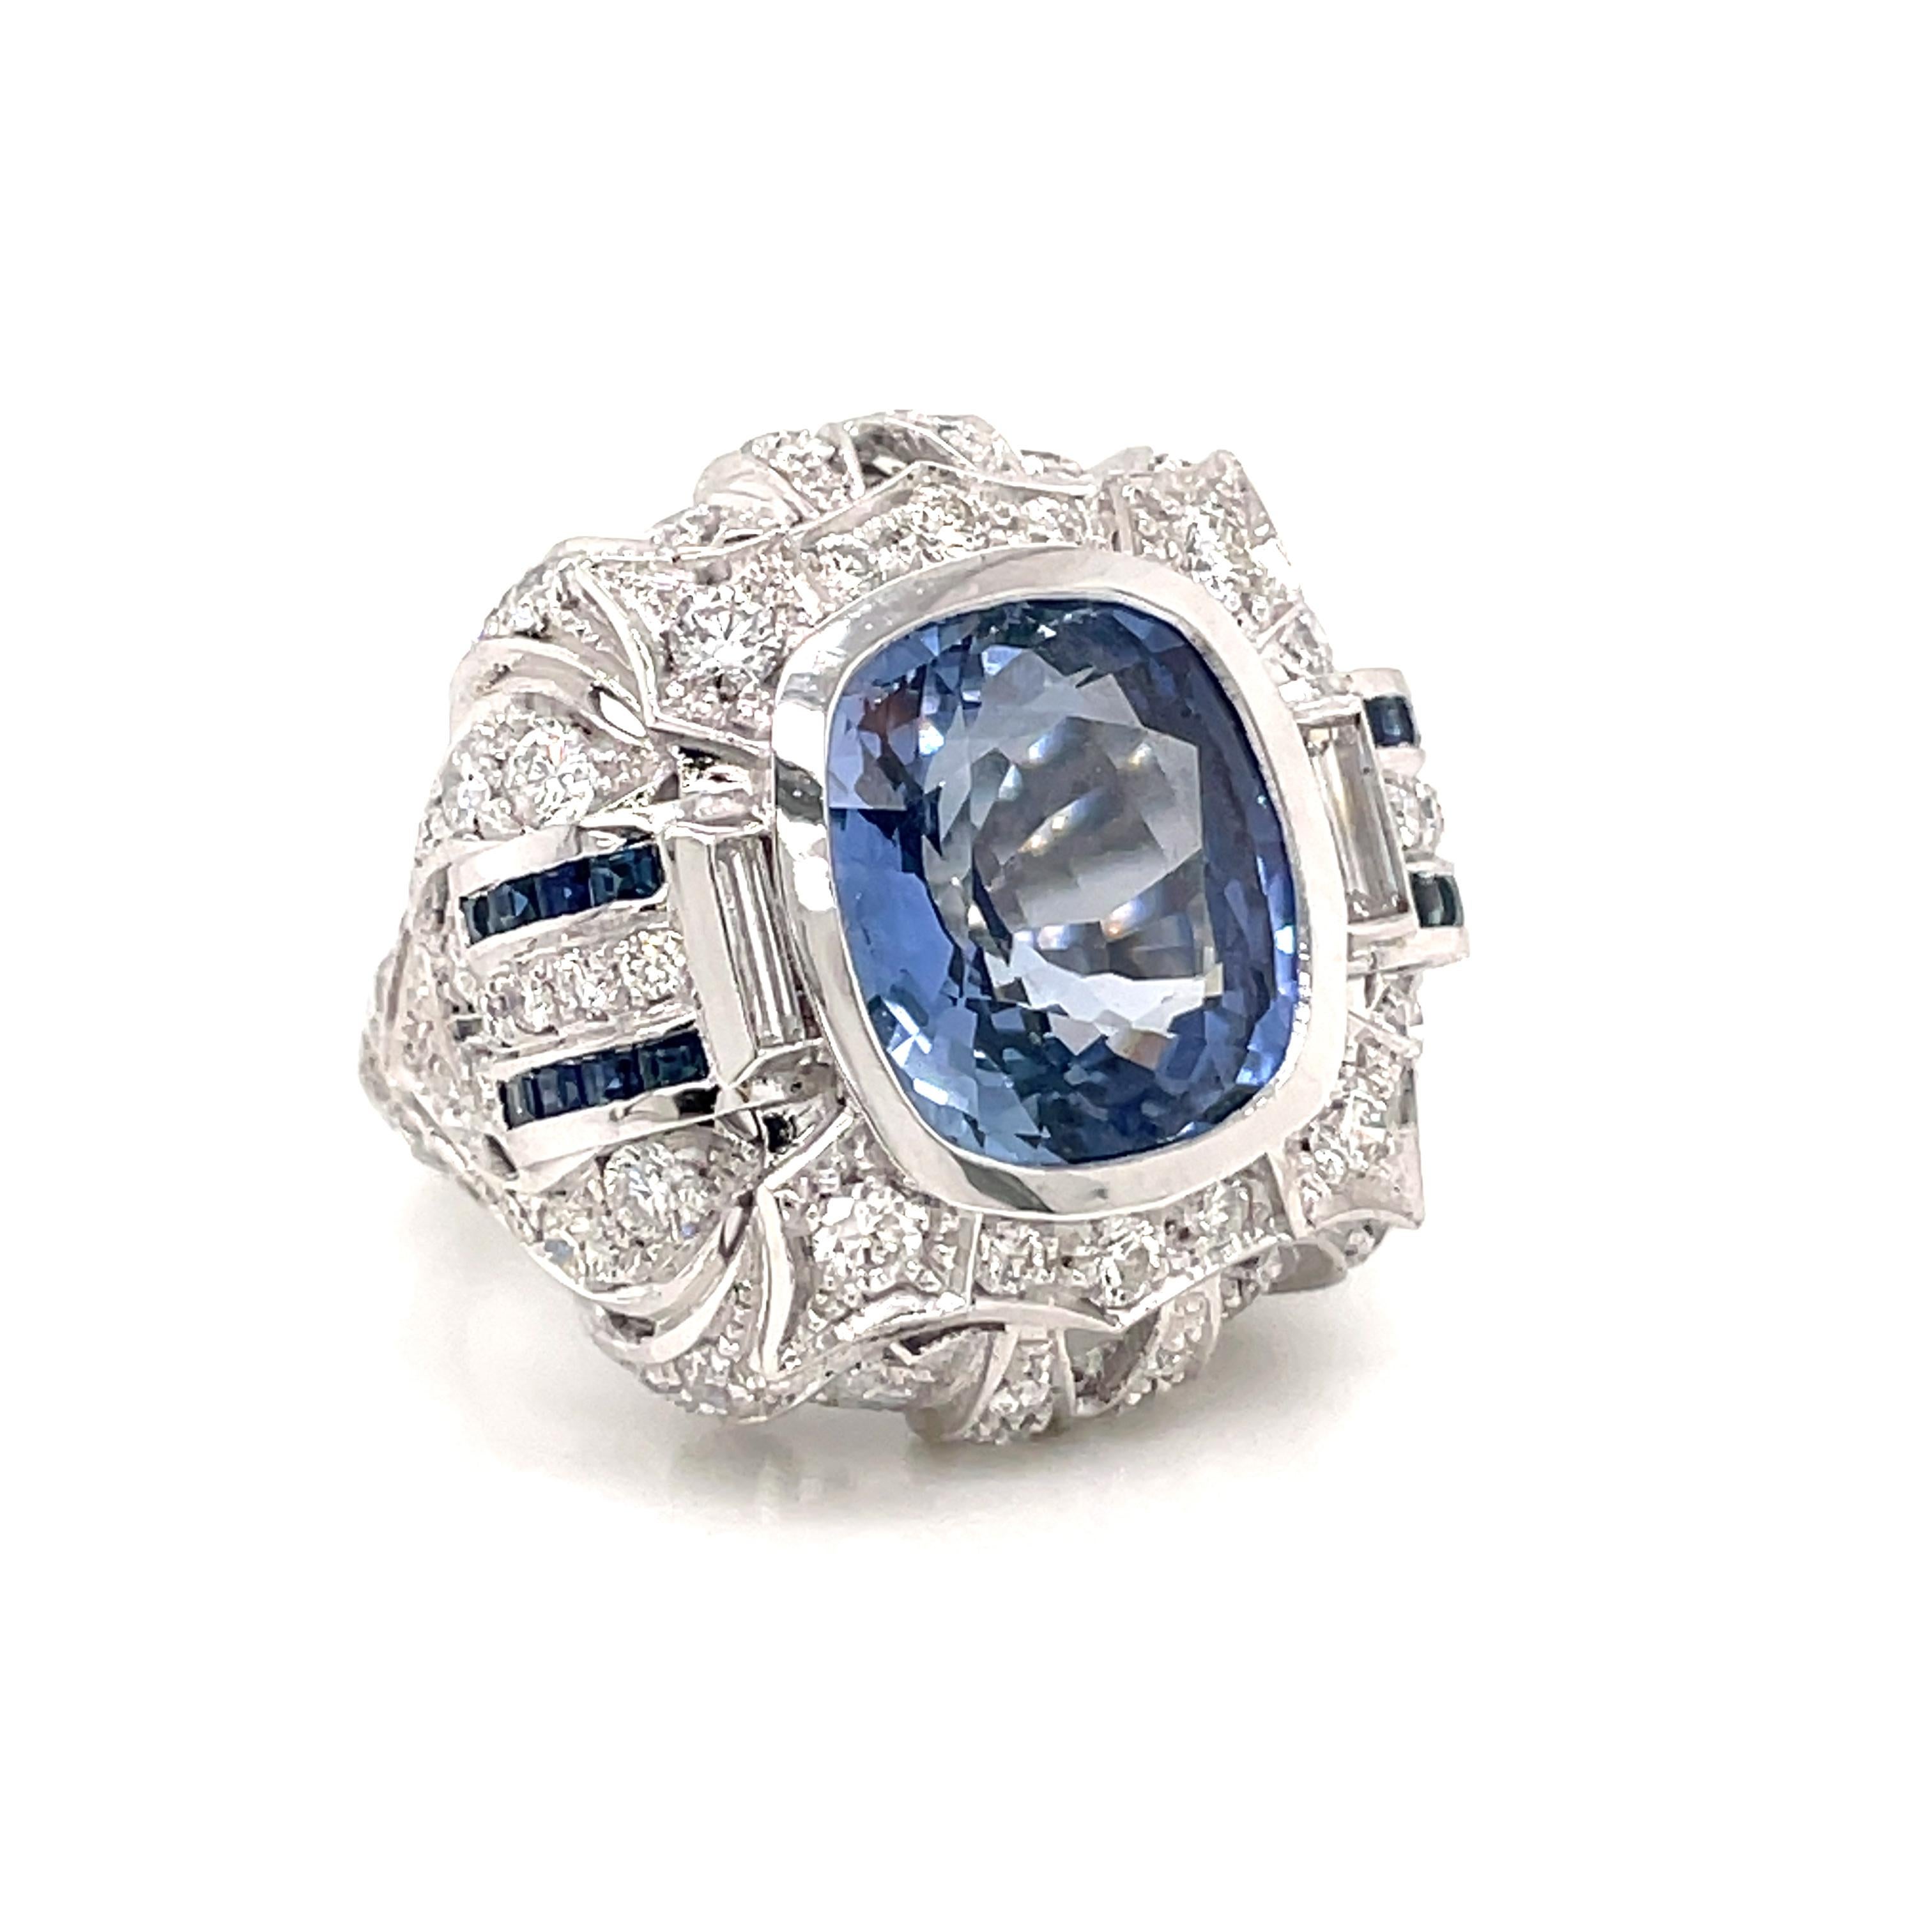 Oval Cut Estate Sapphire Diamond Cocktail Ring